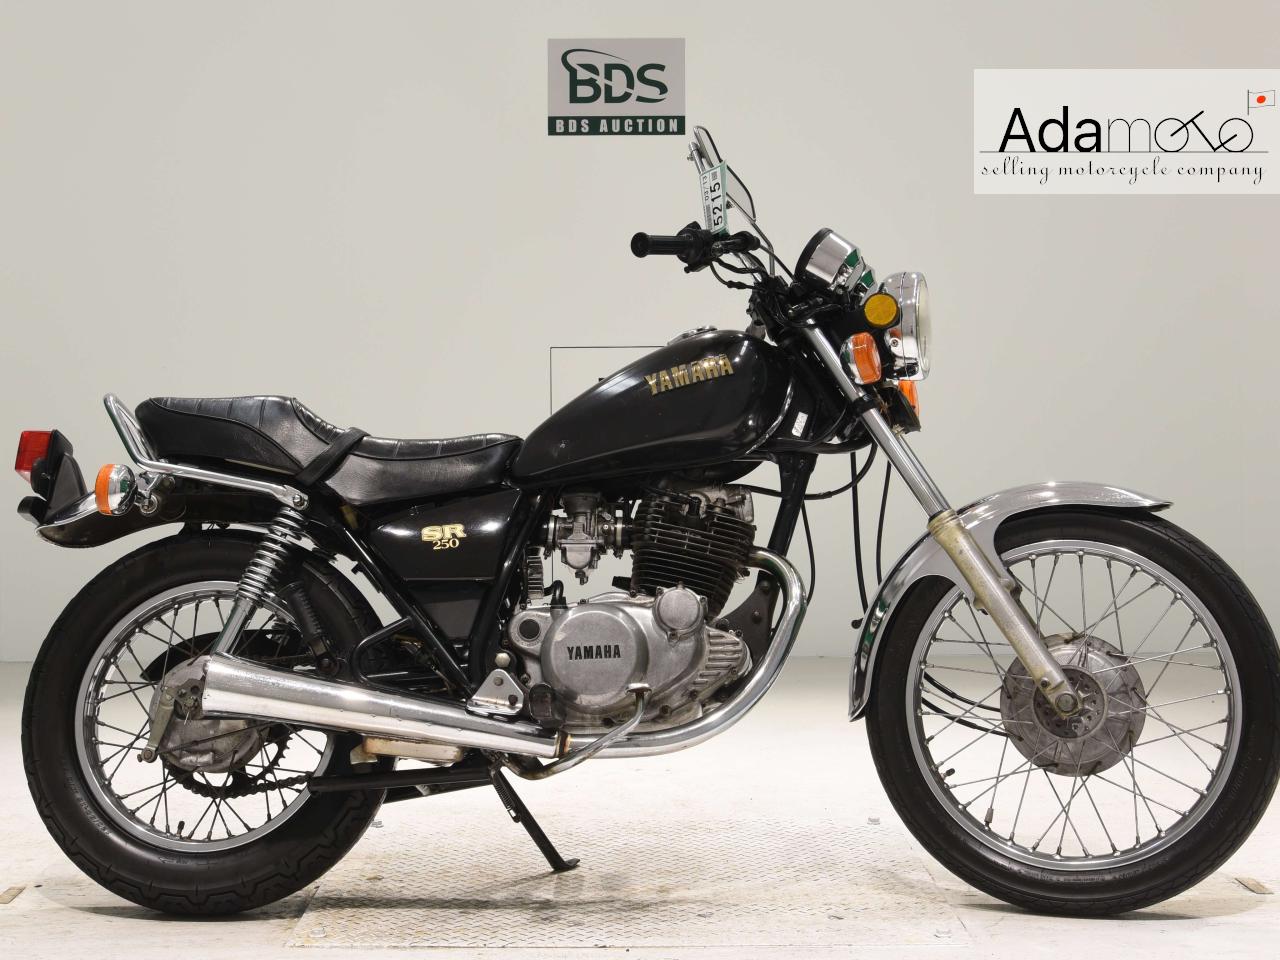 Yamaha SR250 - Adamoto - Motorcycles from Japan